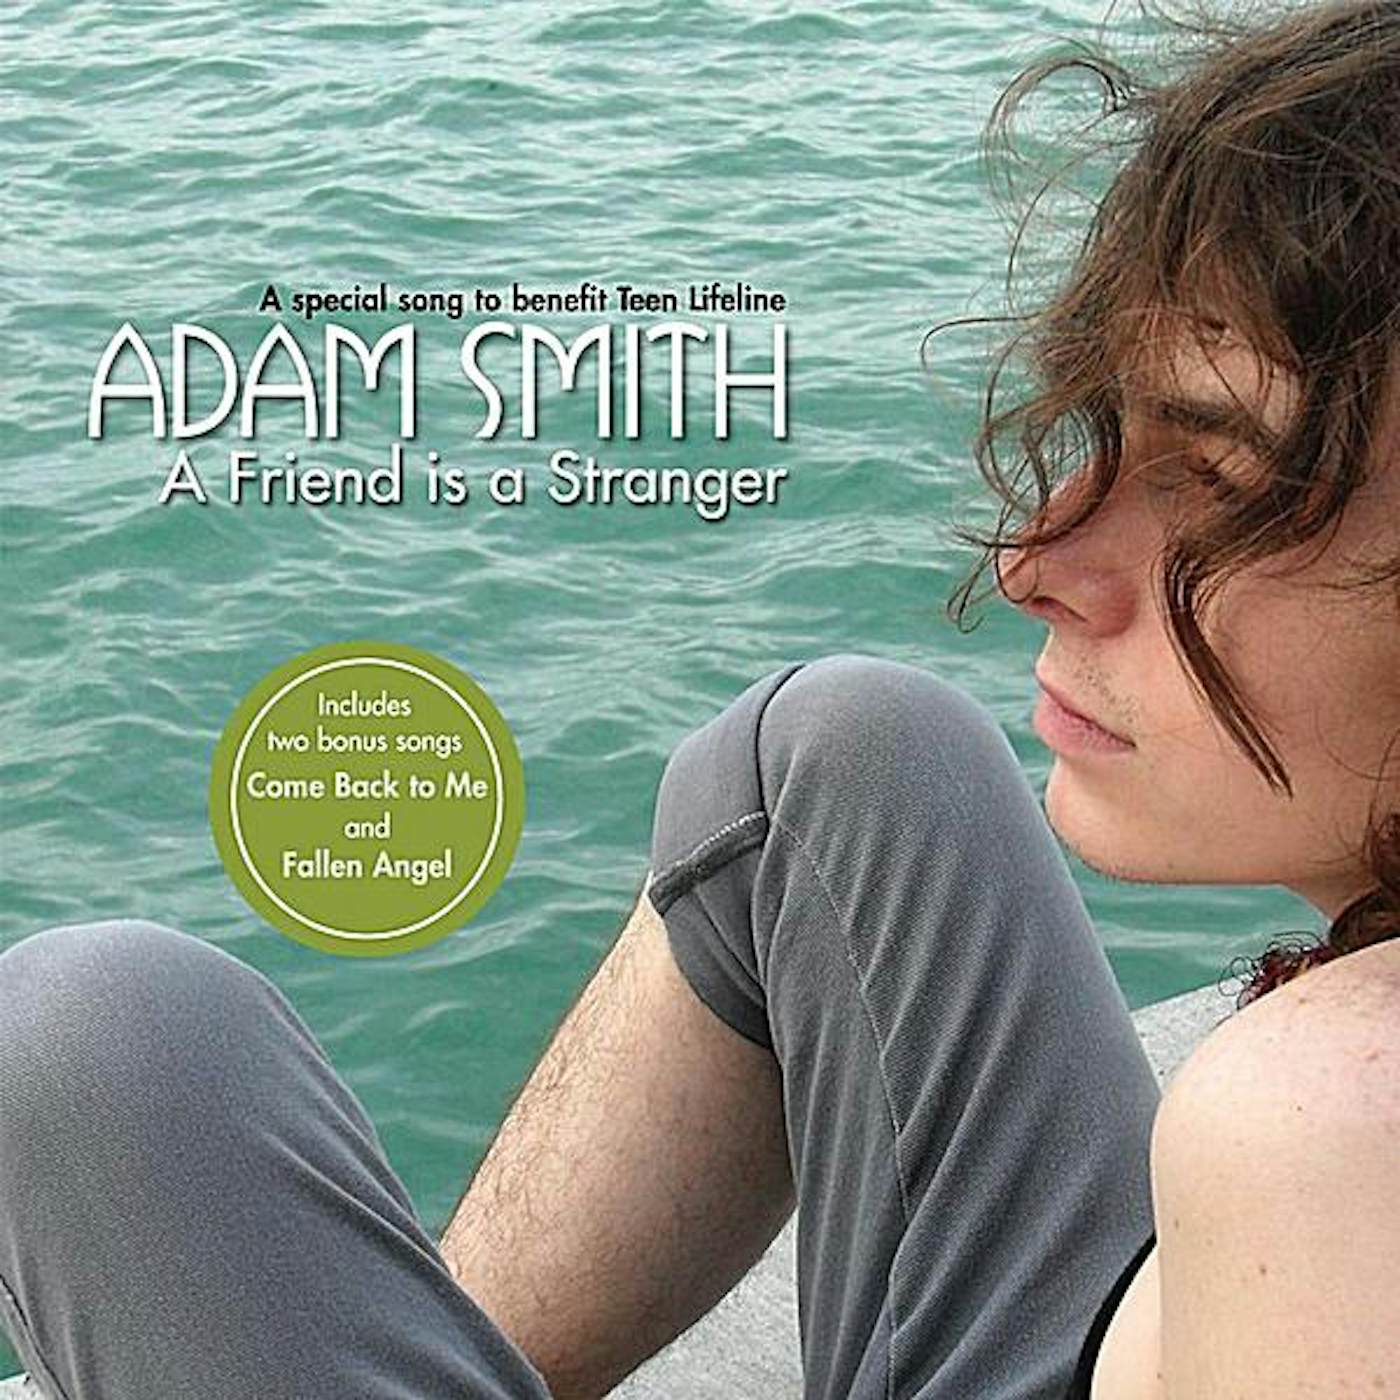 Adam Smith FRIEND IS A STRANGER CD